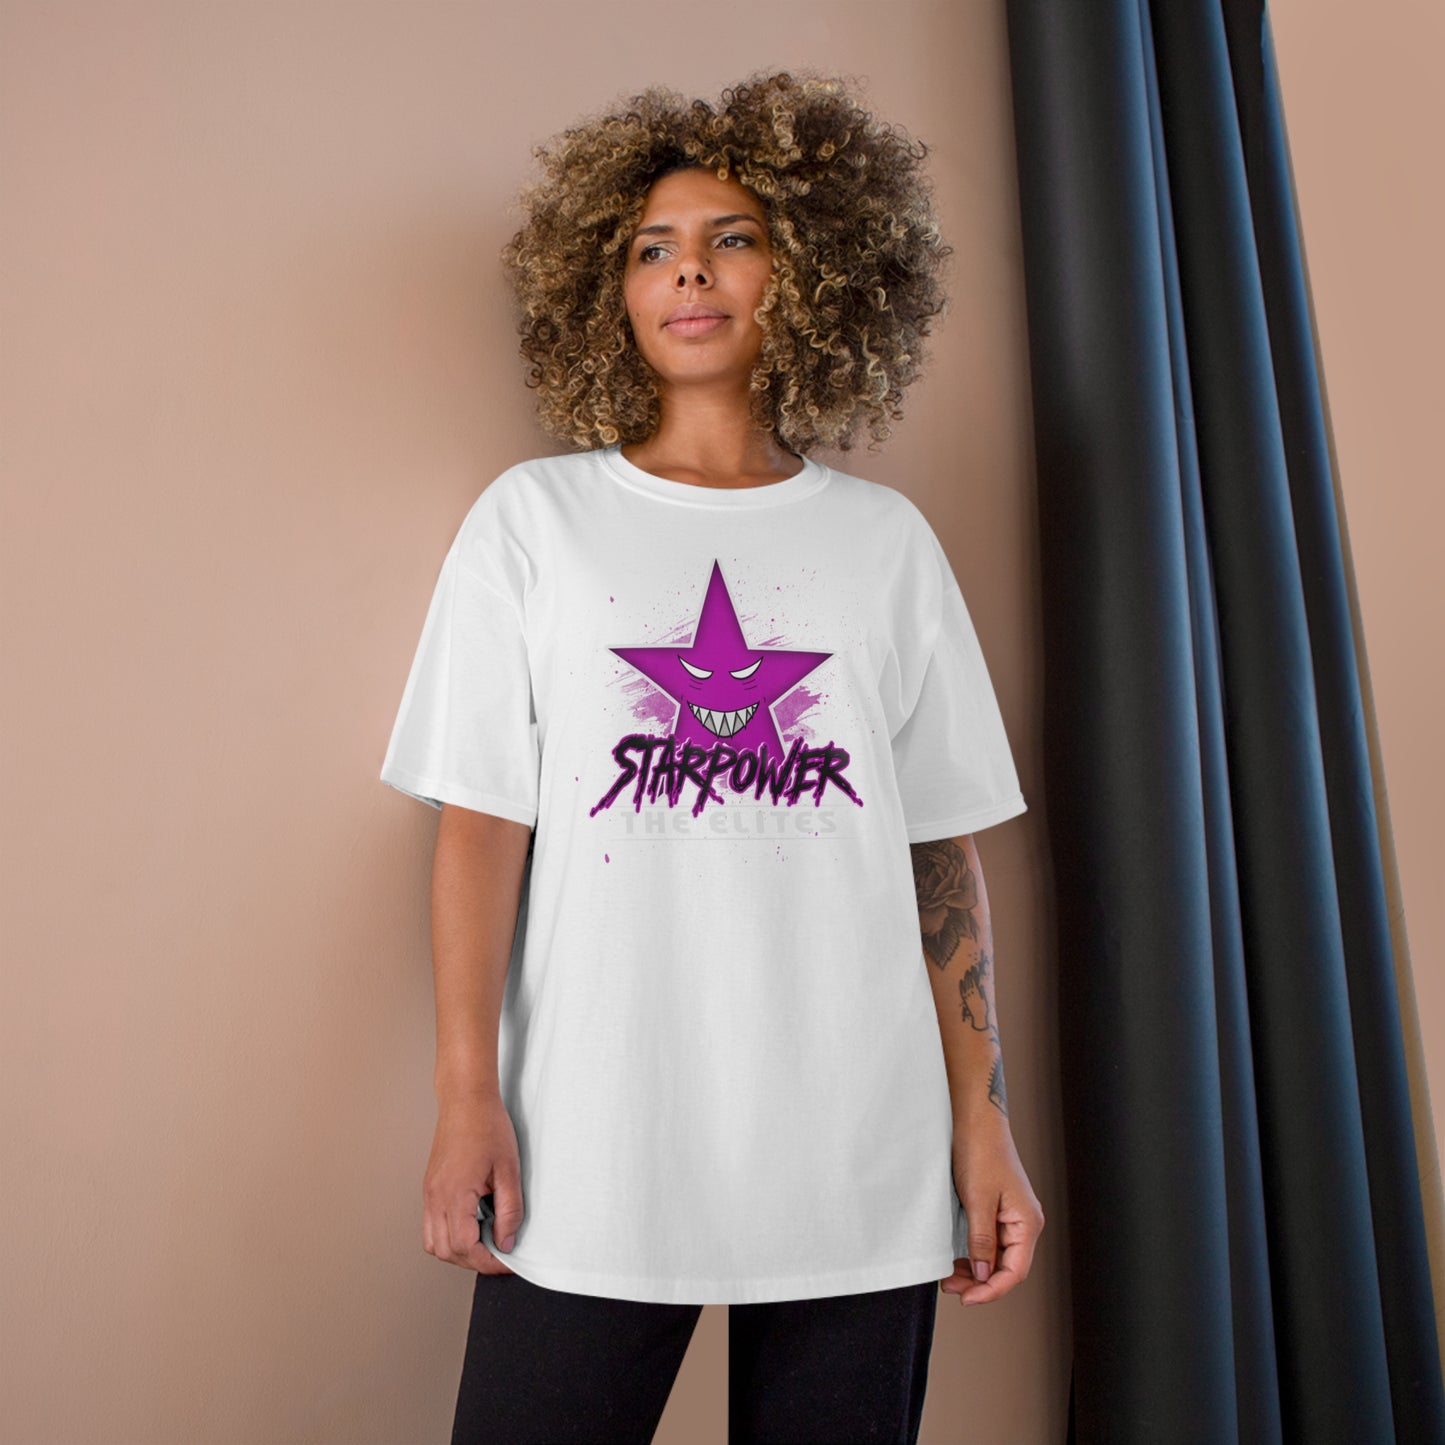 Starpower The Elites T-Shirt - Purple